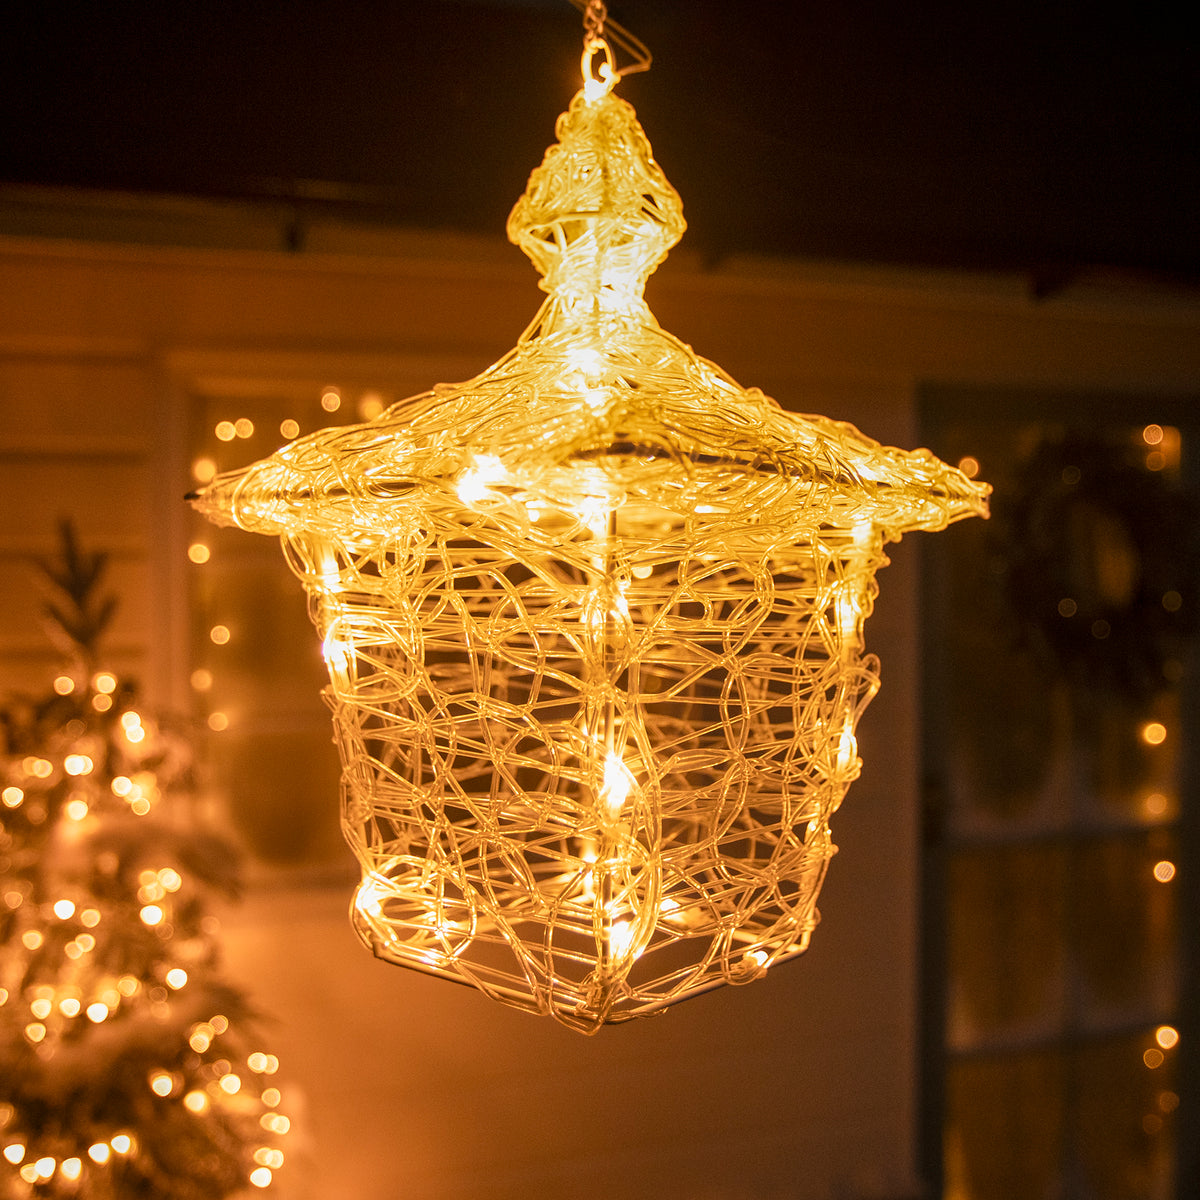 35CM Soft Acrylic Light Up Christmas Hanging Lantern with 40 White/Warm White Twinkling LEDs